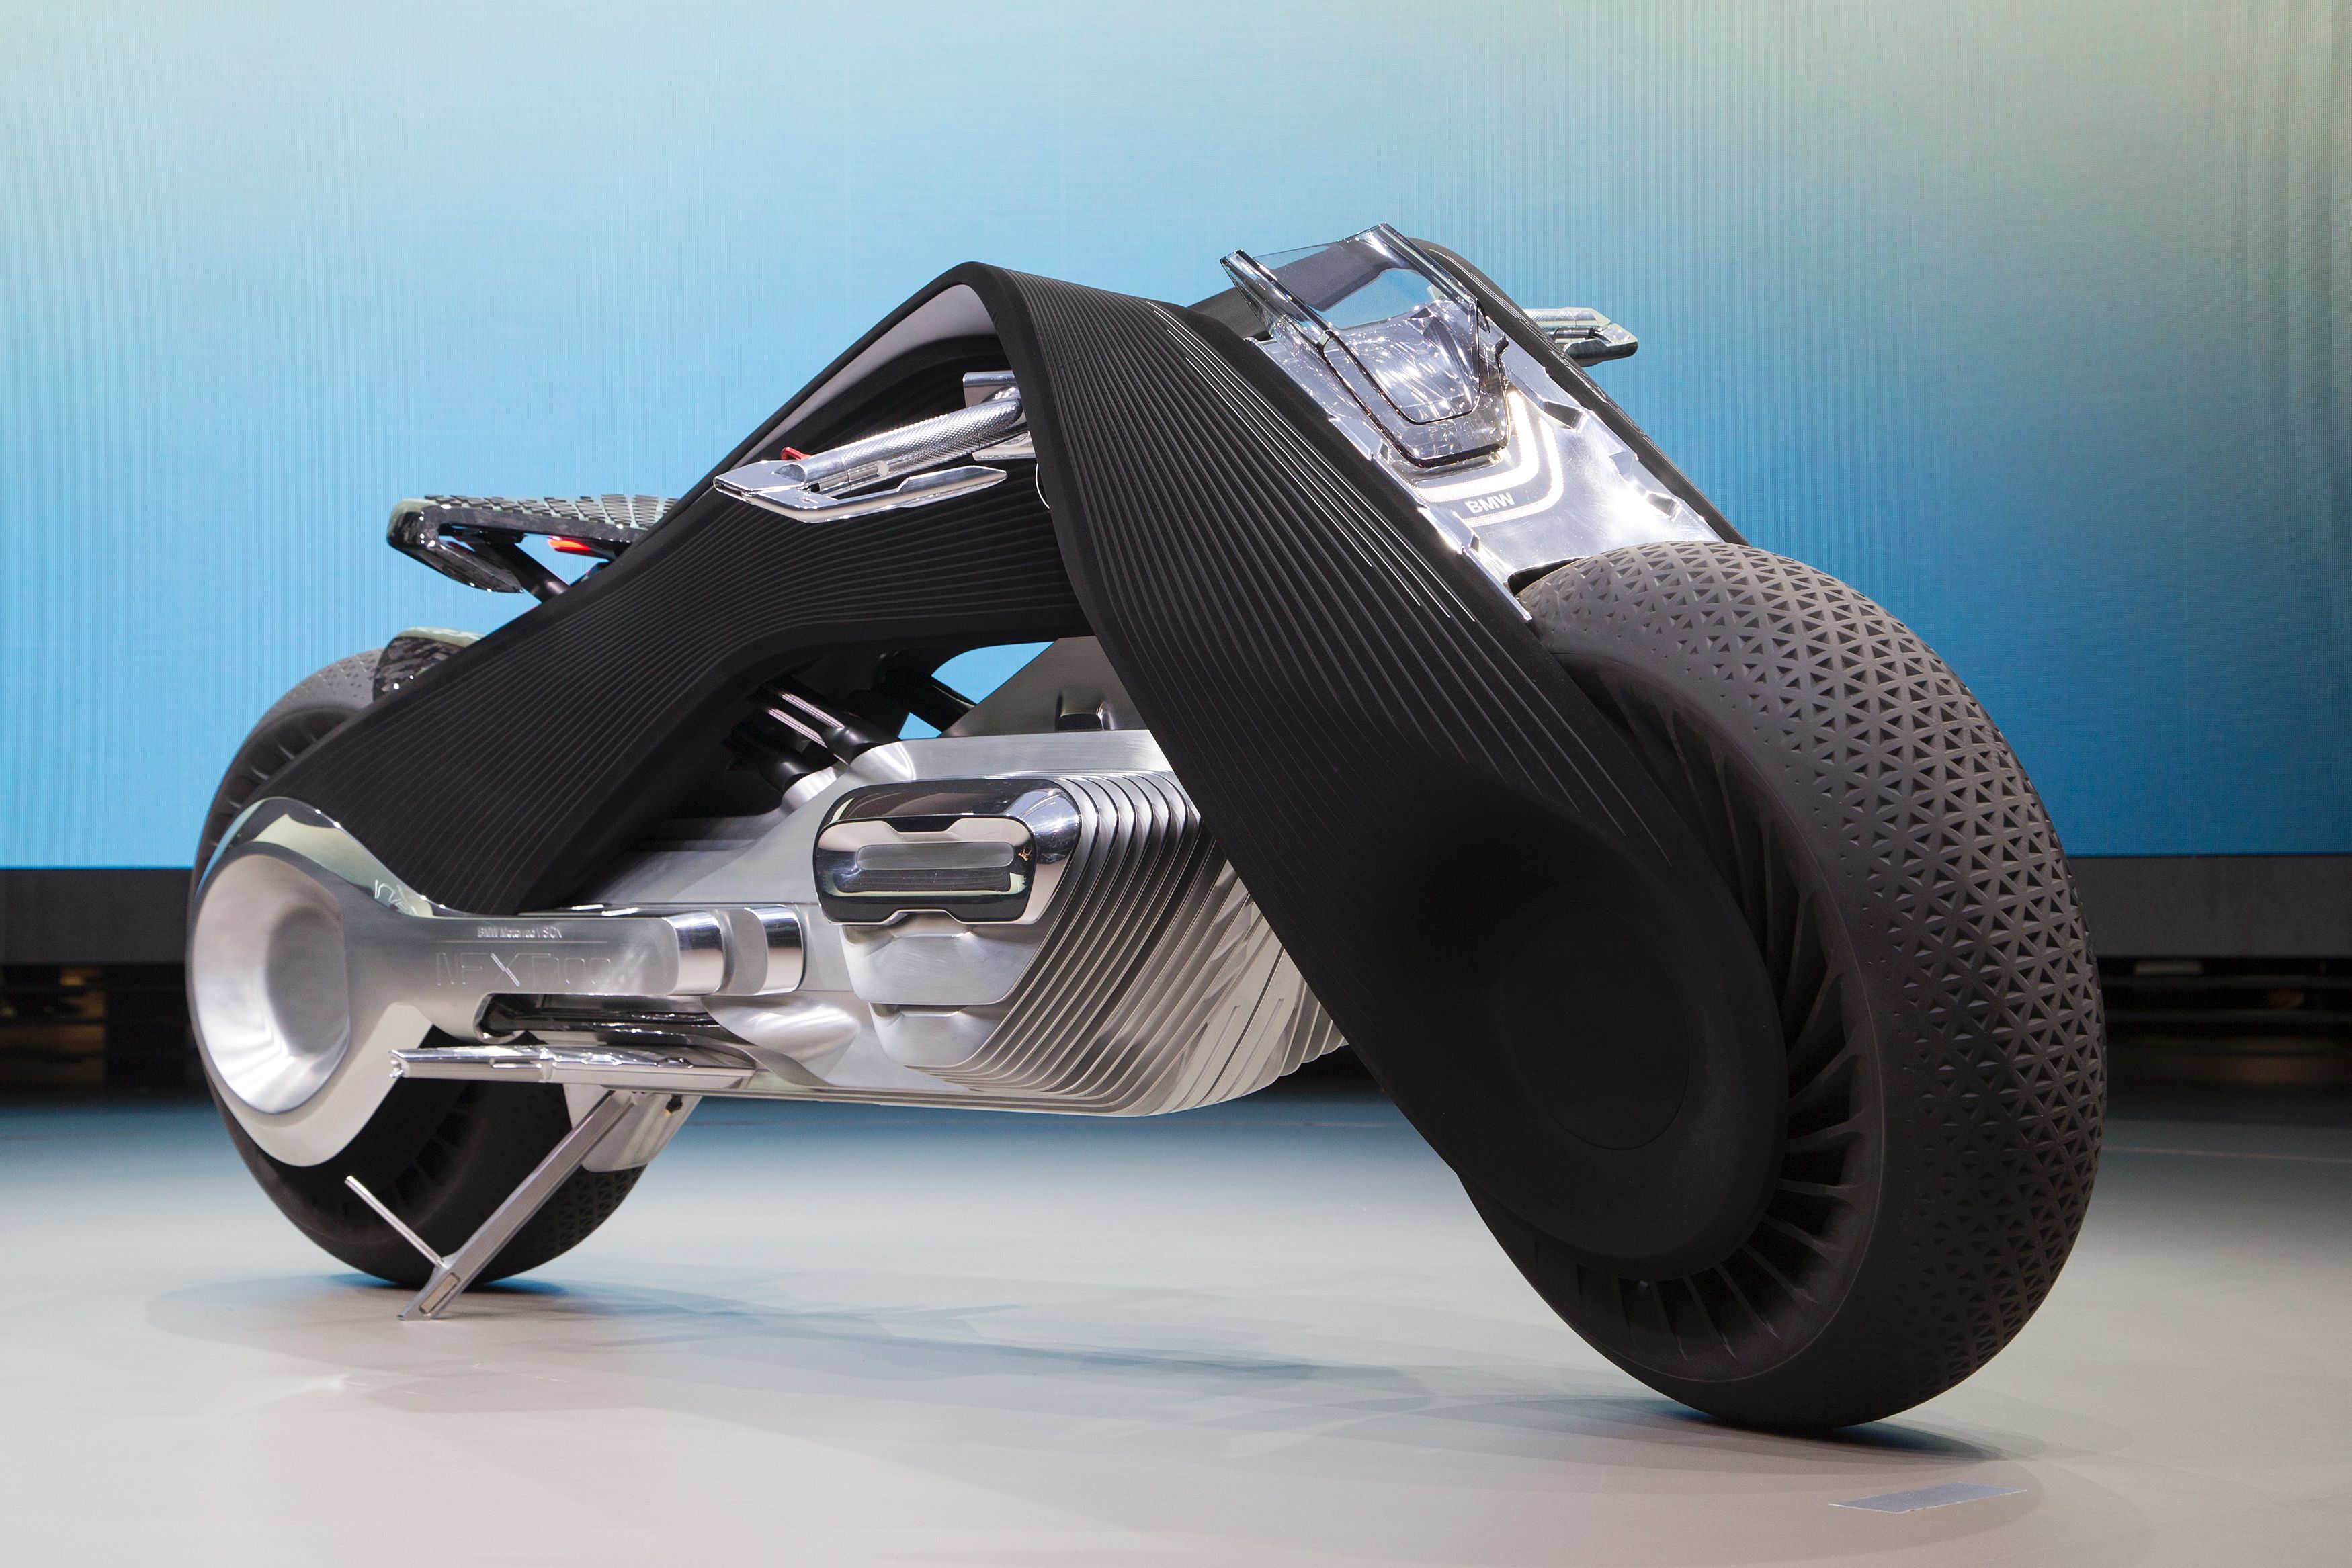 Bmw Motorrad Vision Concept Motorcycle Unveiled In Santa Monica